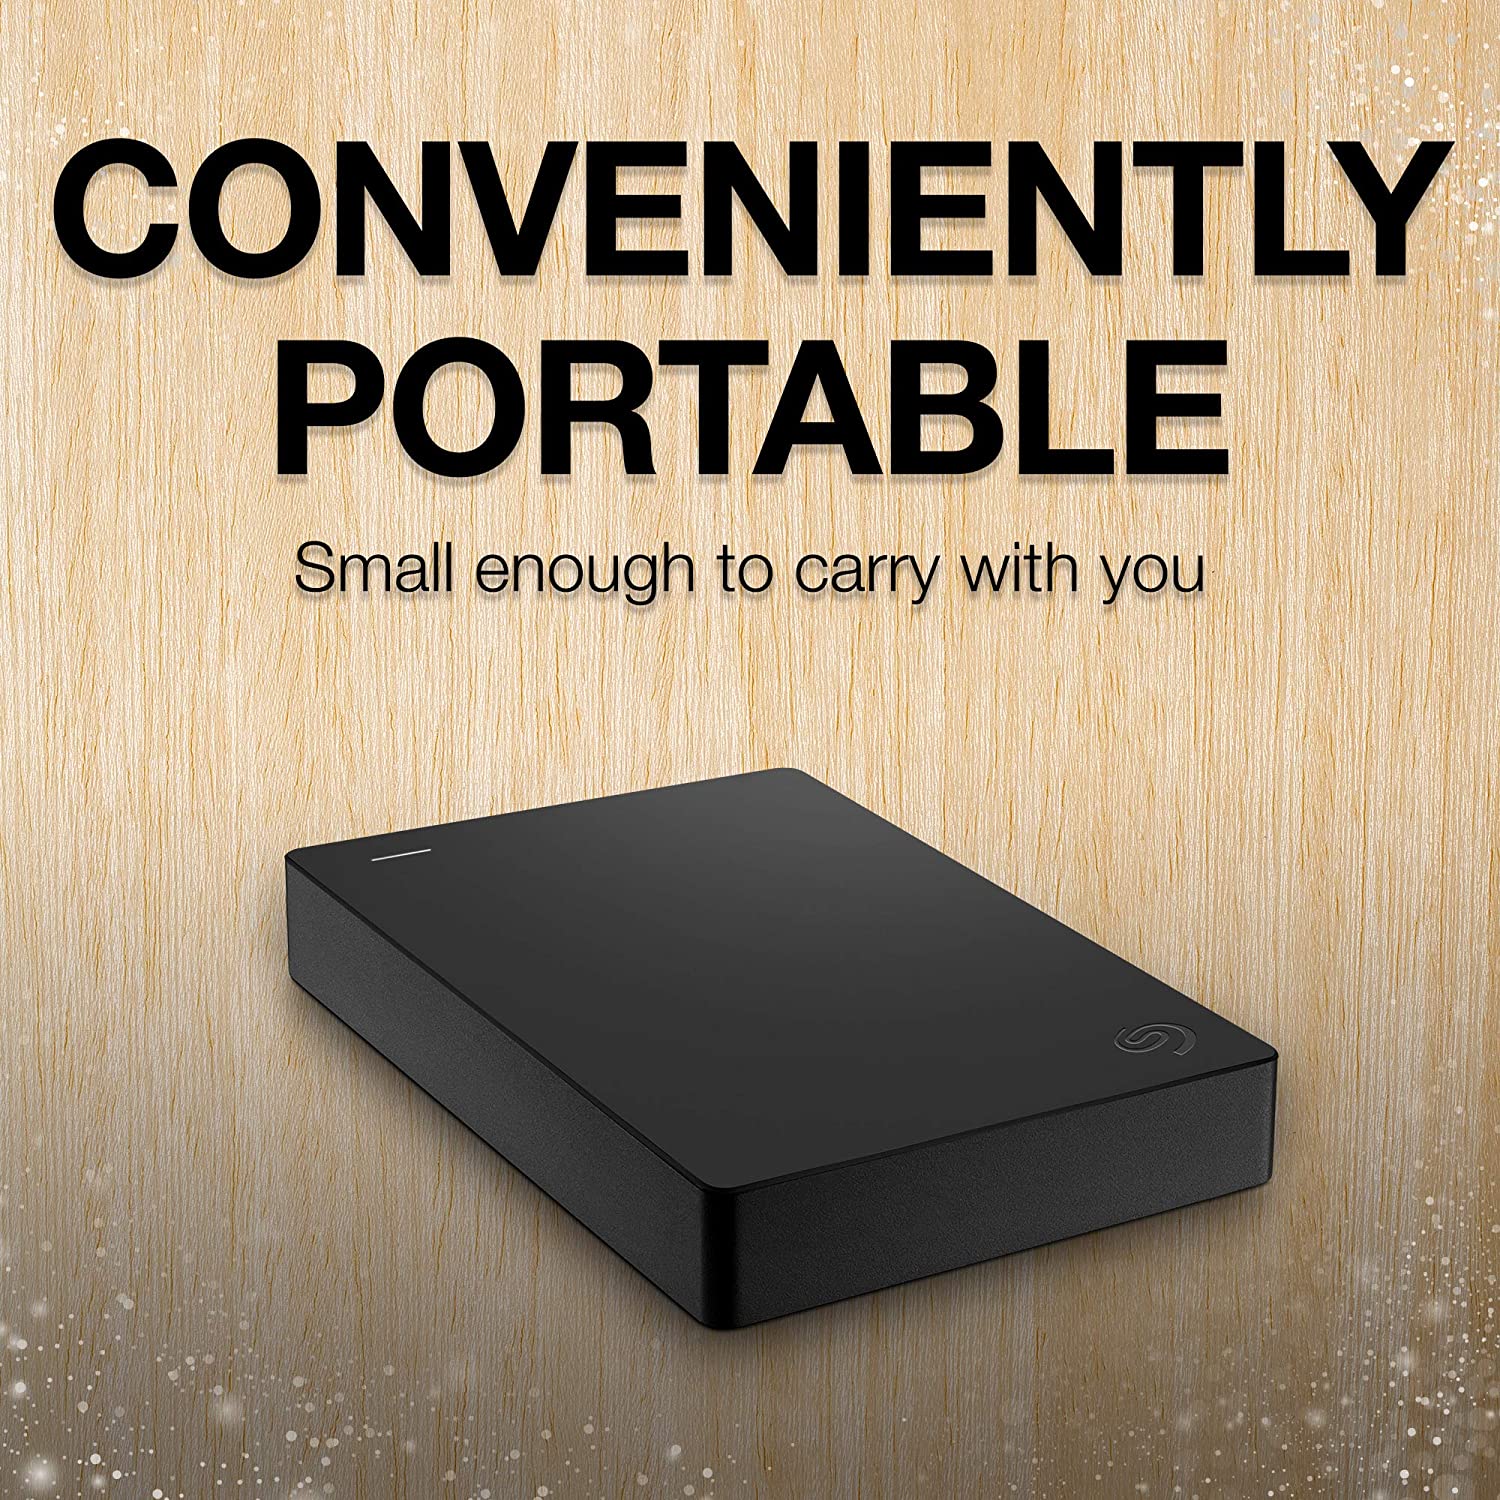 Seagate Retail 4TB Portable Hard Disk Drive - Dark Grey (STGX4000400)